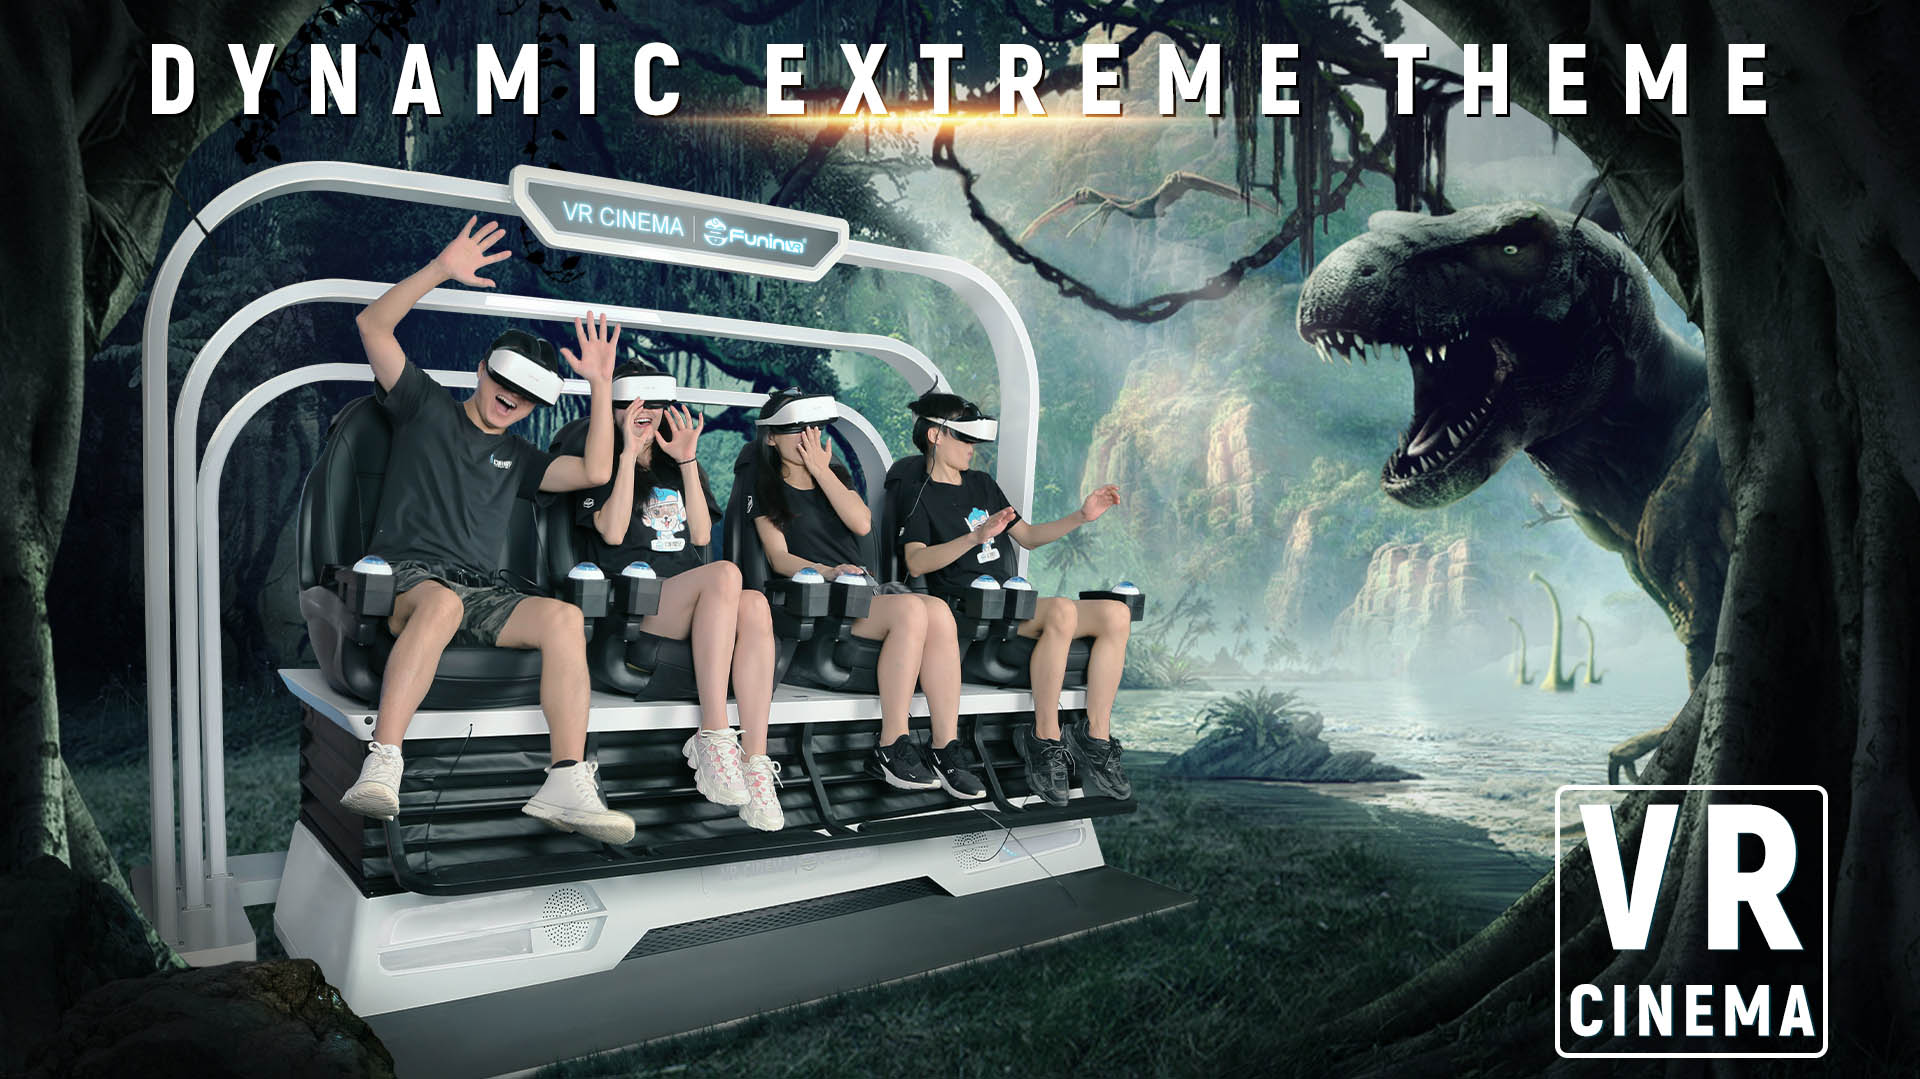 9D VR Theme Park Cinema Simulator 4 Seats Virtual Reality Equipment - Dynamic Theme - 1